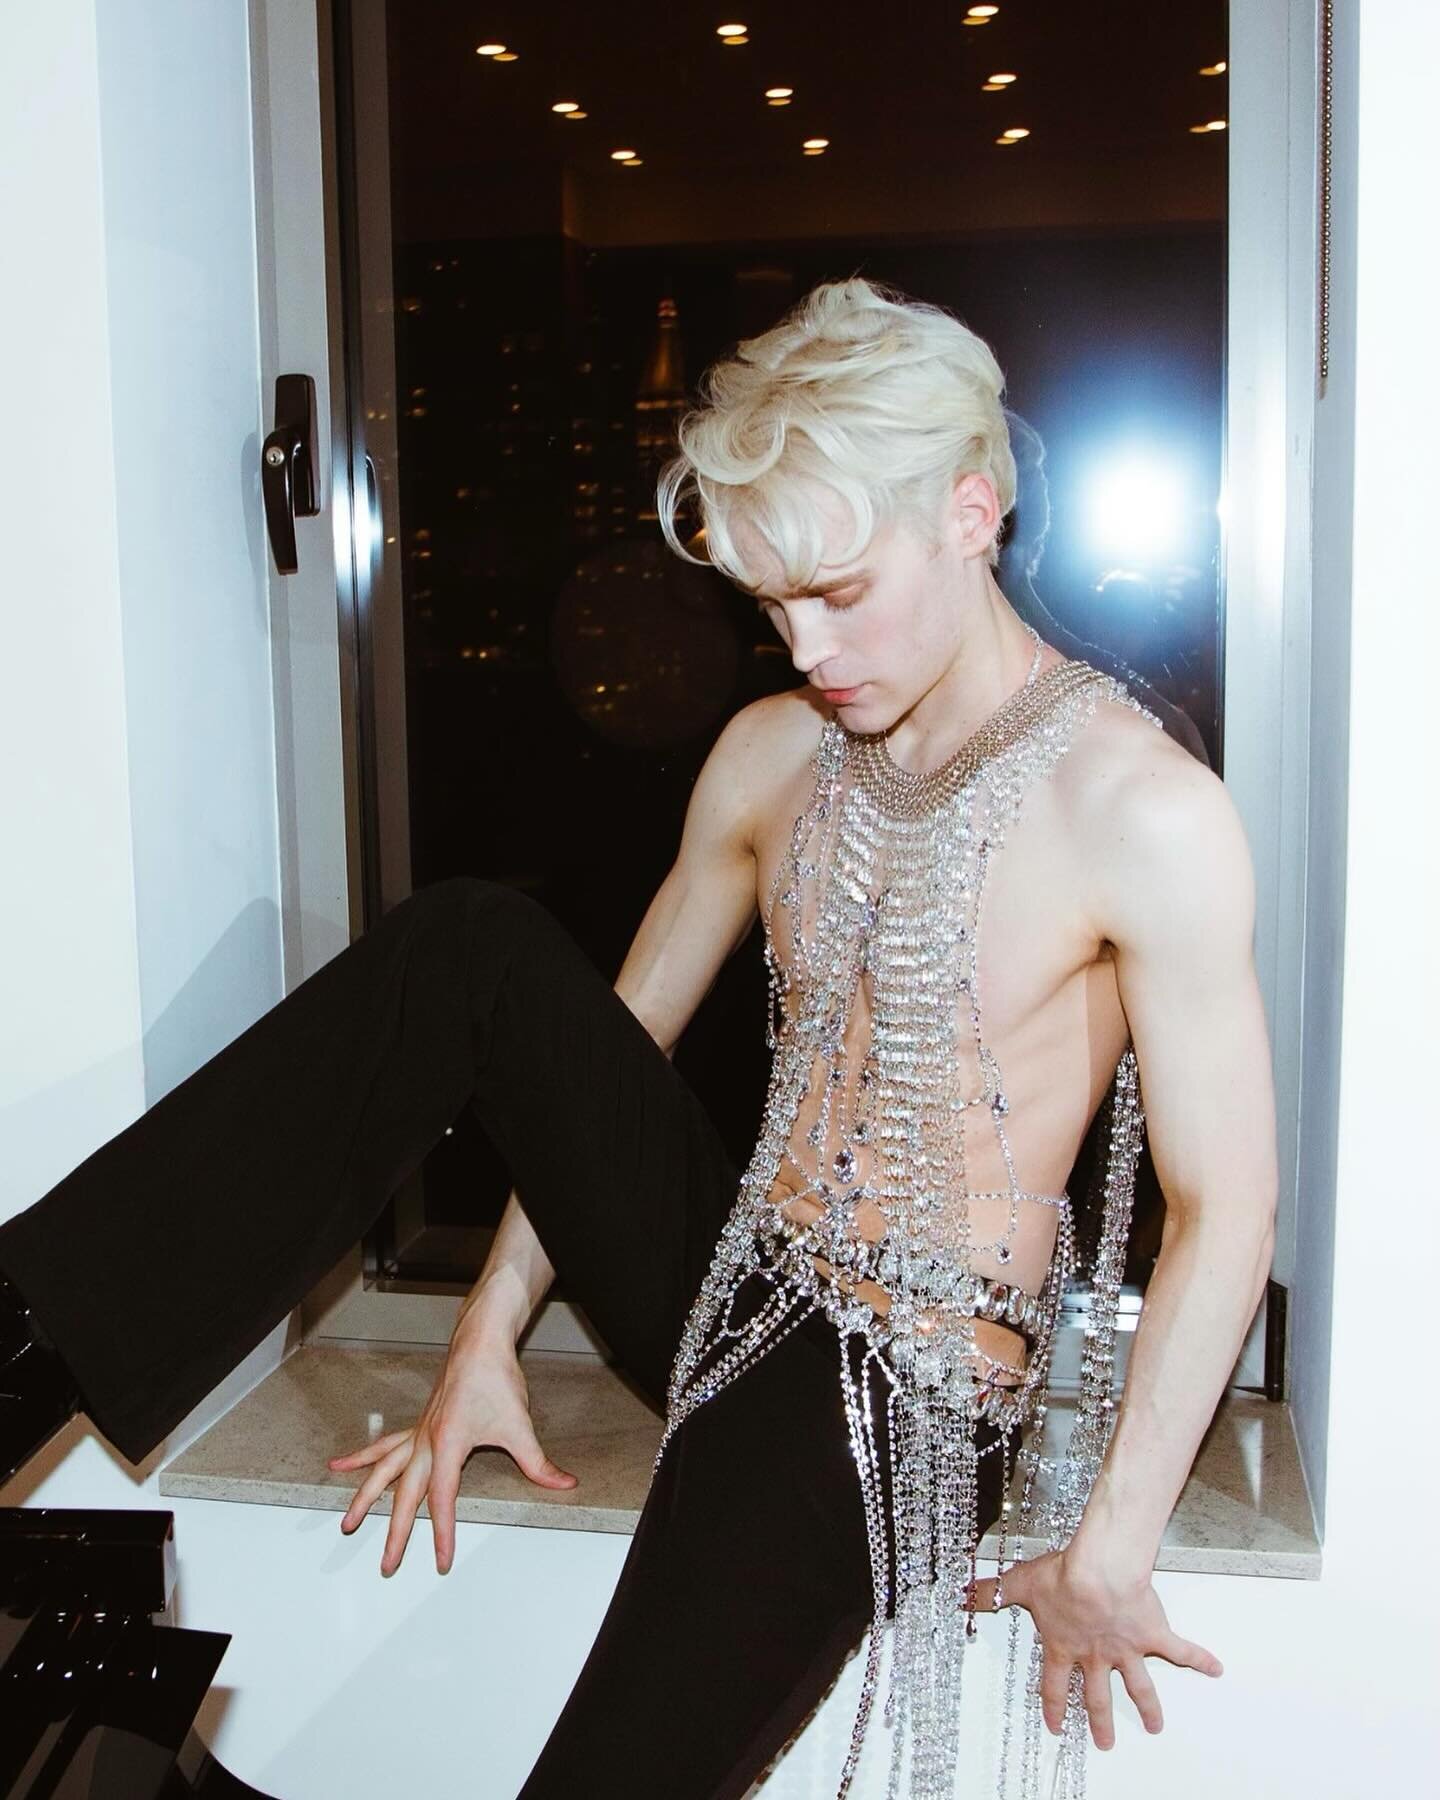 Diamonds 💎 or pearls? 💫

Photographer: @devinkasparian 
#fashion #popmusic #bejeweled